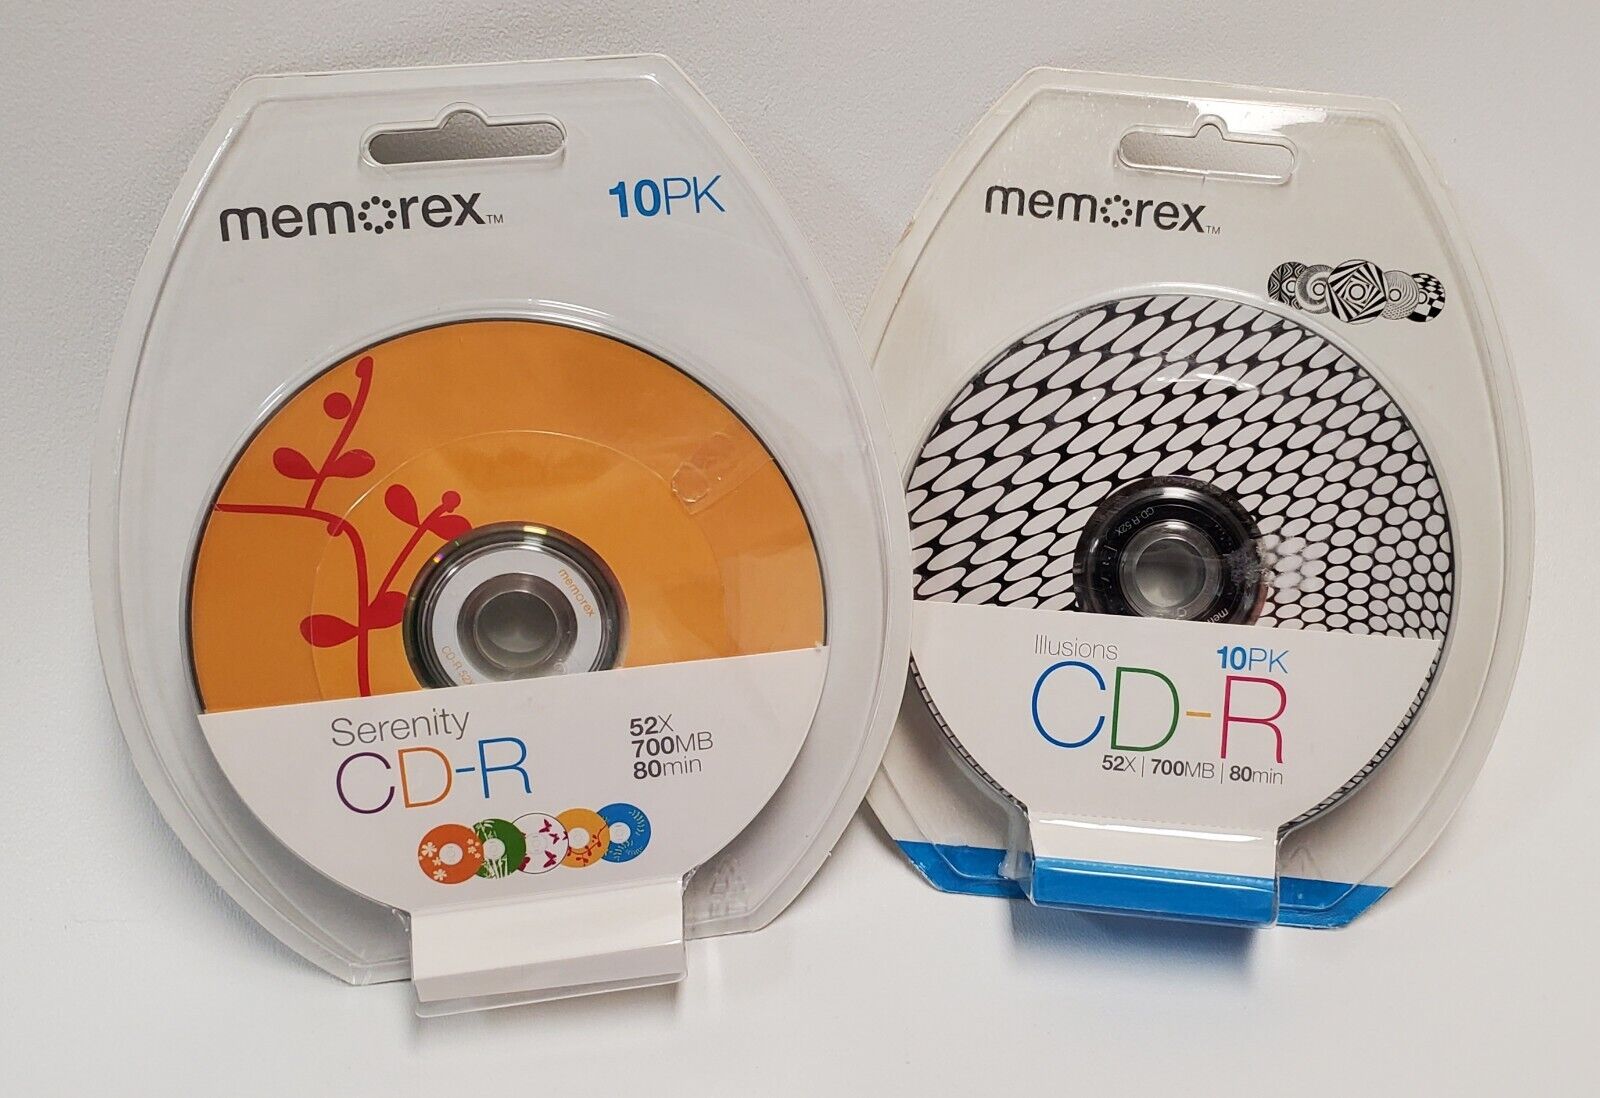 LOT of 2 (10pk) Memorex 10PK CD-R 52X 700 MB 80 Min Recordable COLORFUL DESIGNS